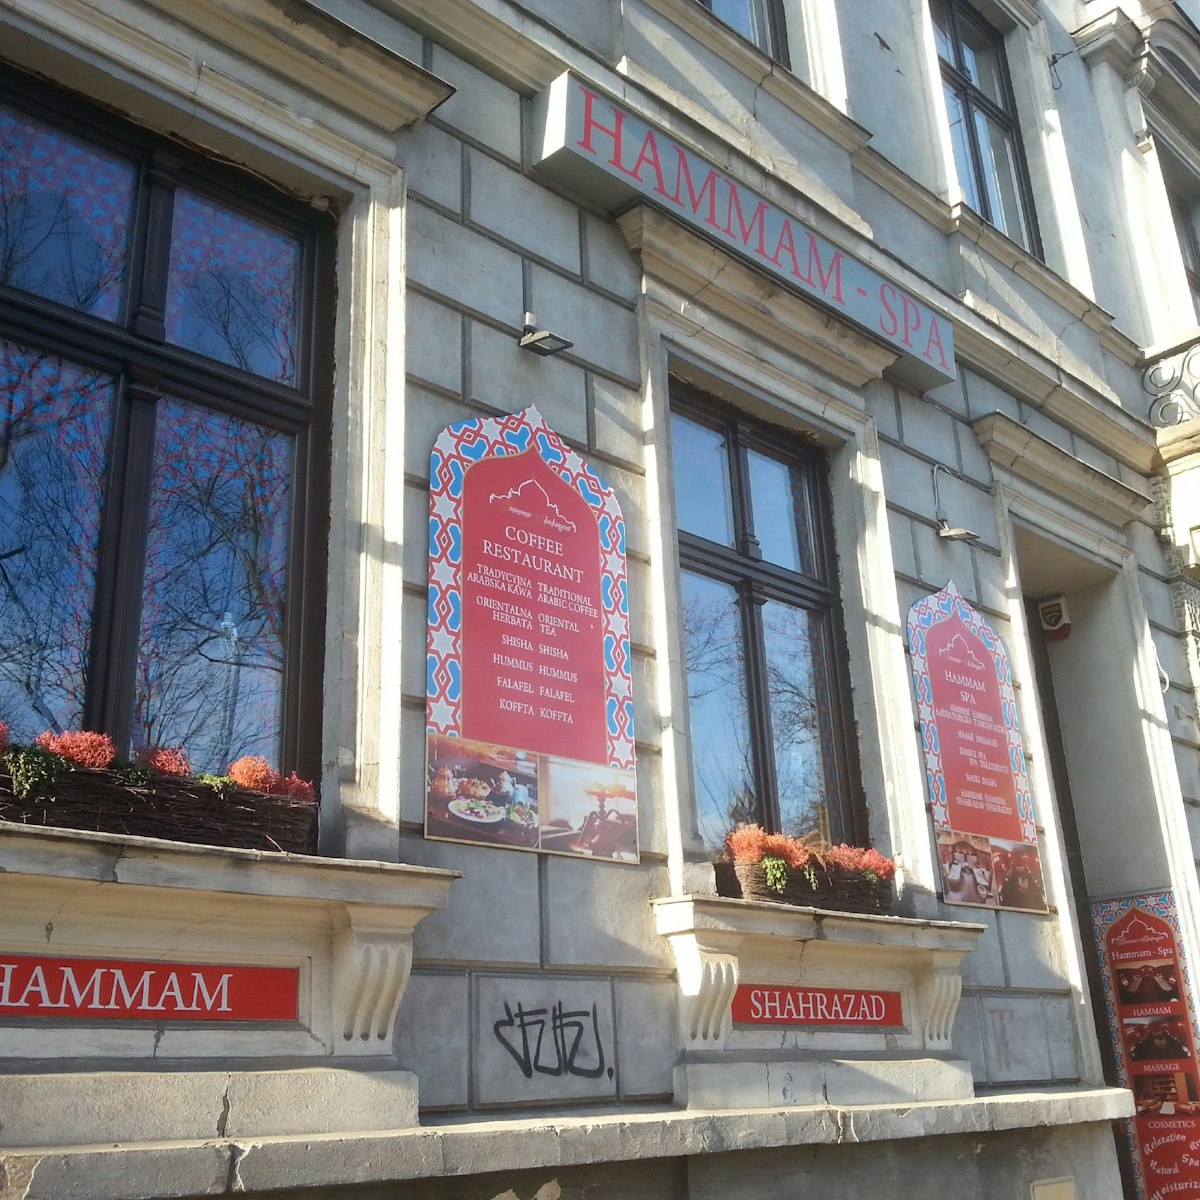 Hammam Shahrazad, along Smolensk you'll find this colourful restaurant and spa